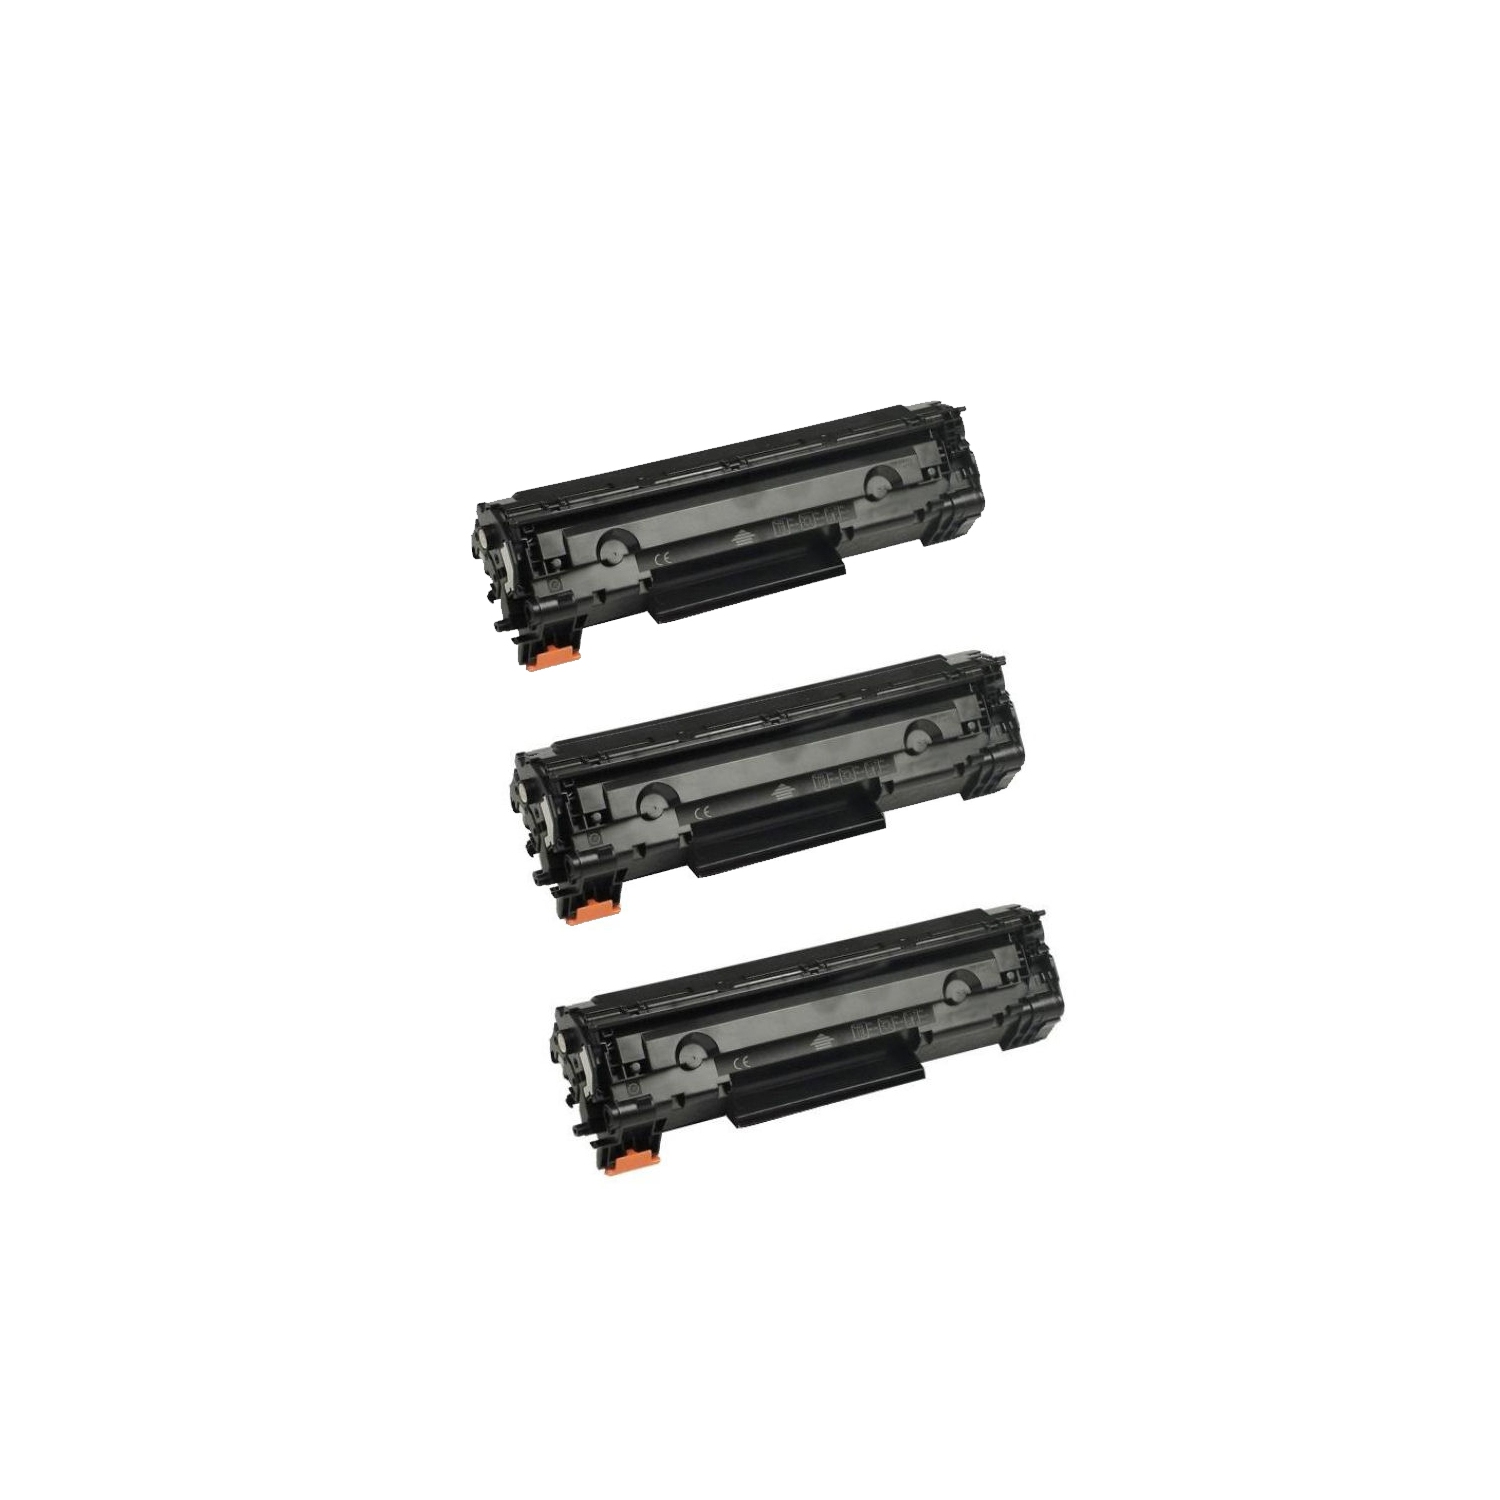 3 PK CRG128 Compatible Toner Cartridge for Canon 128 L100,D550,MF4412,MF4420n,MF4450,MF4550,MF4570dn,MF4580dn ,MF4770n ,MF4880dw,MF4890dw